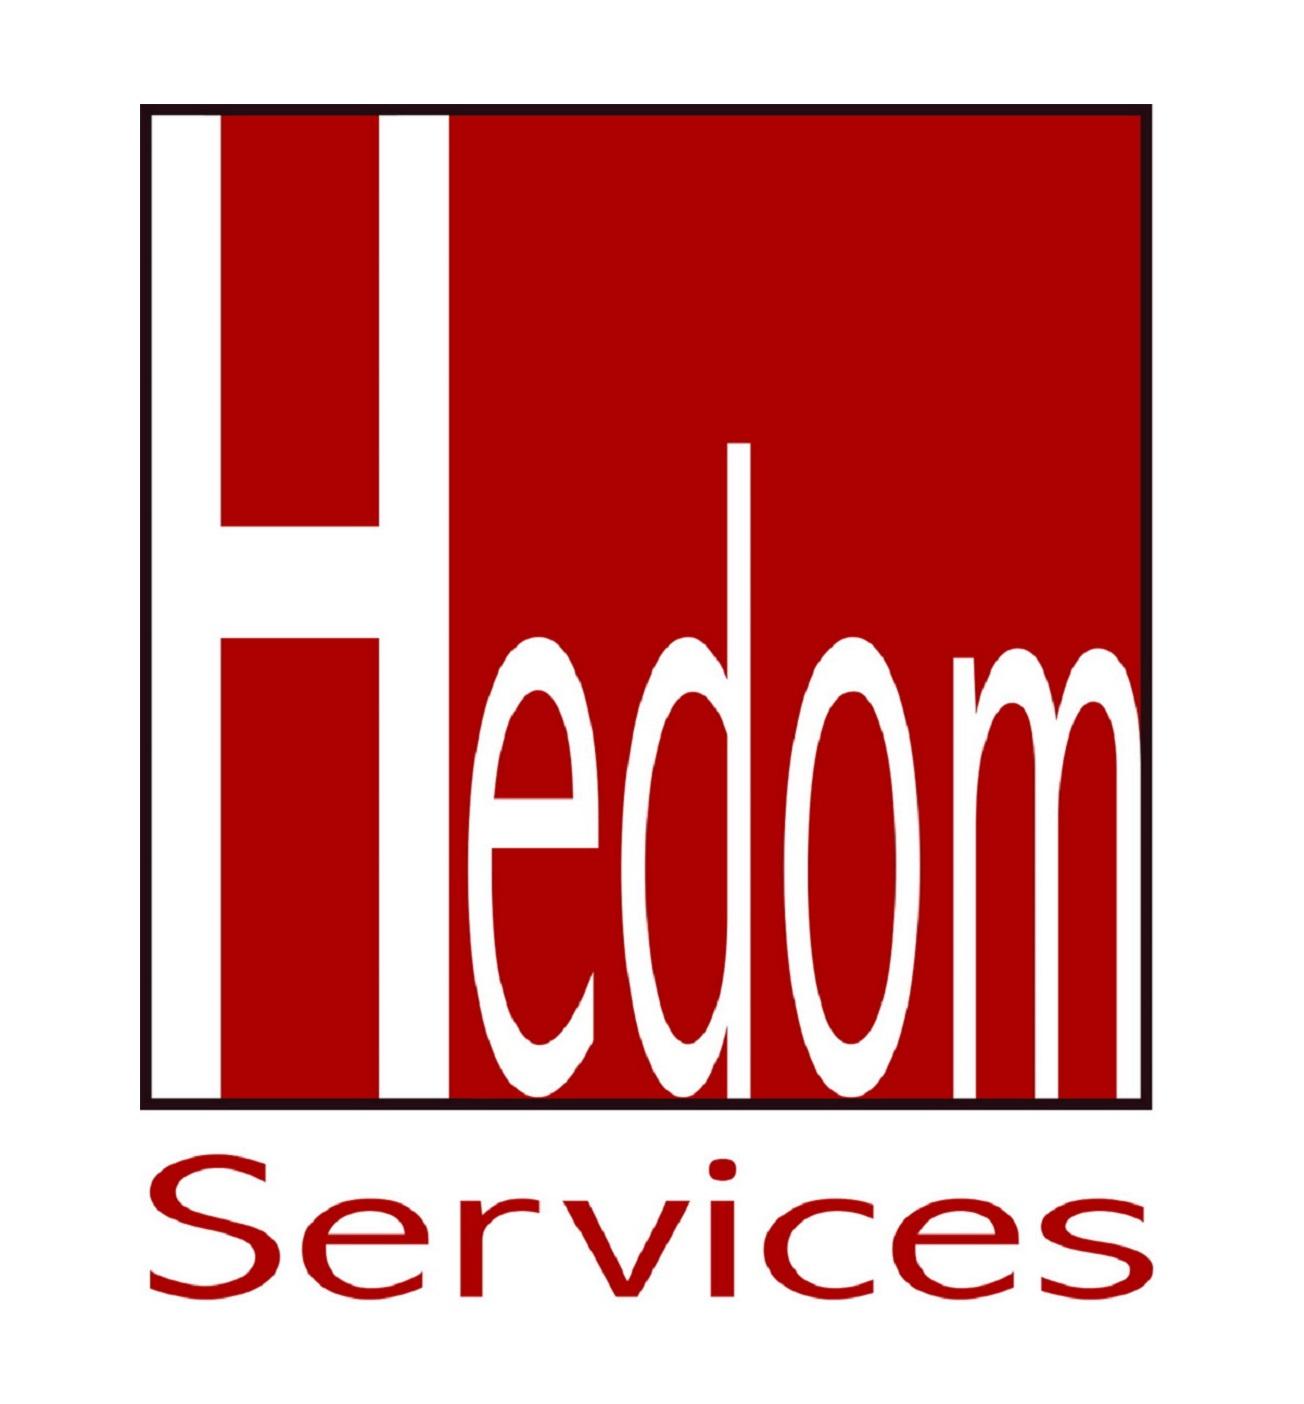 Hedom